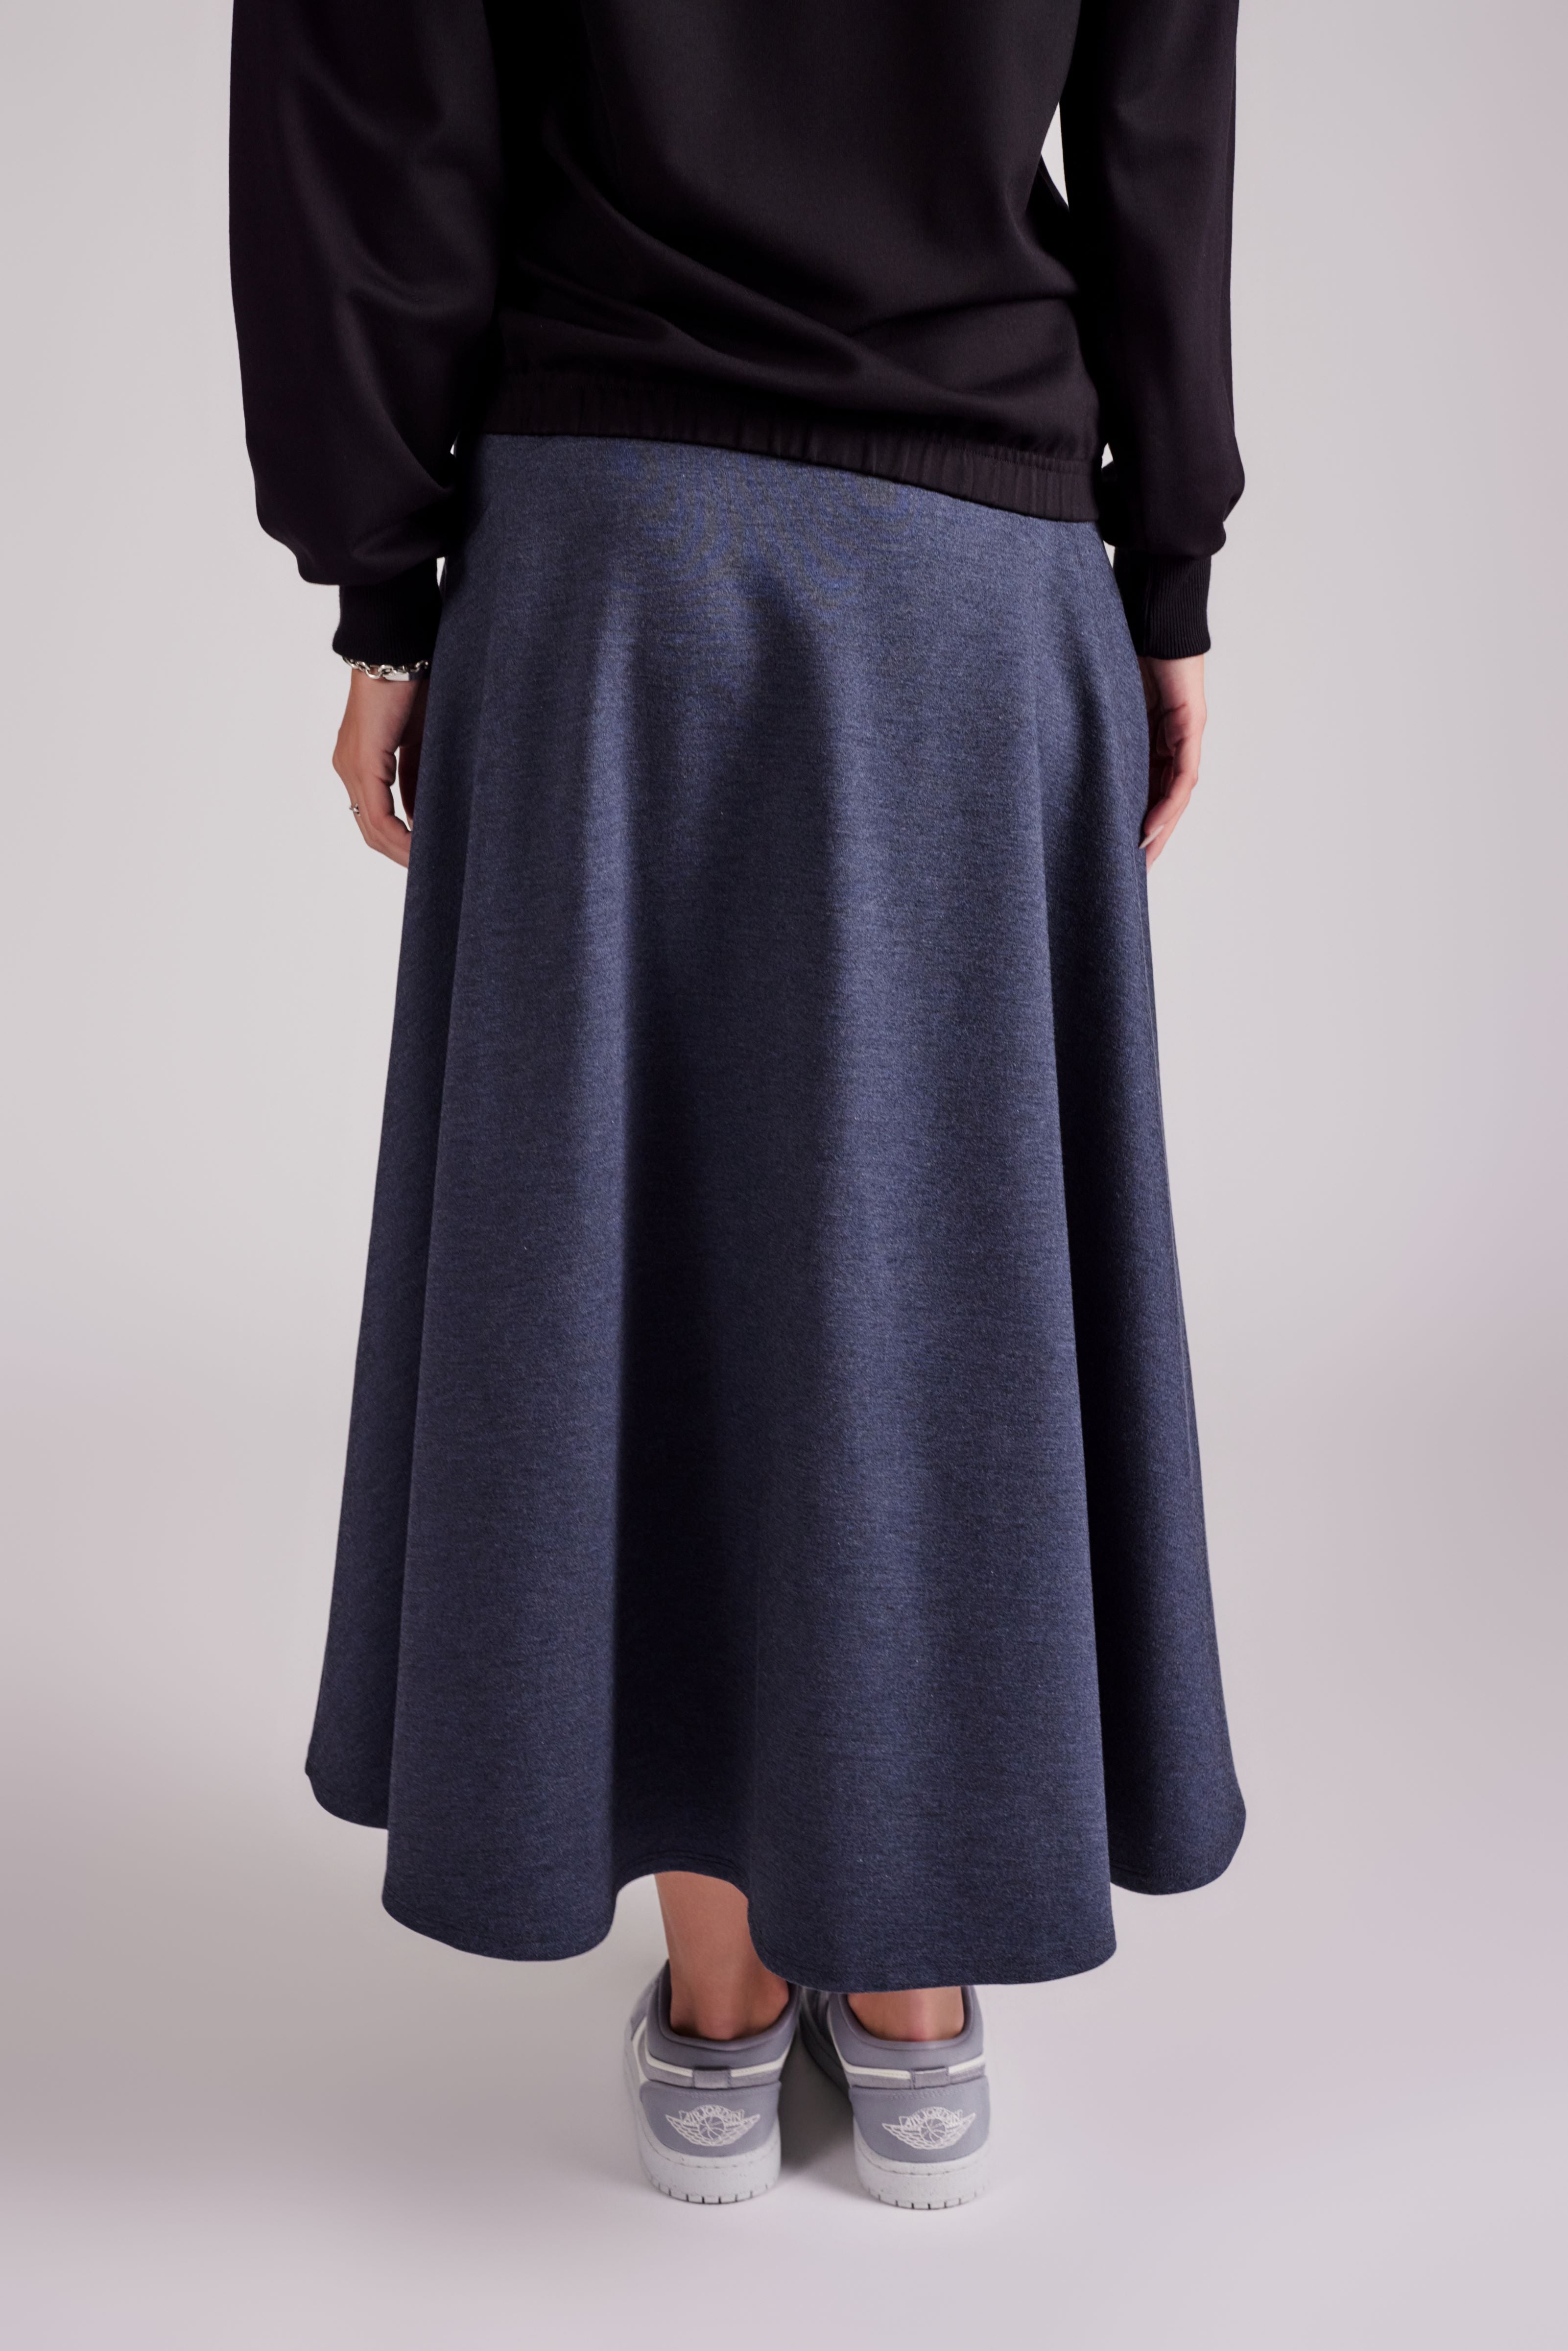 Curved Panel Skirt - Heather Lake - Olivvi World